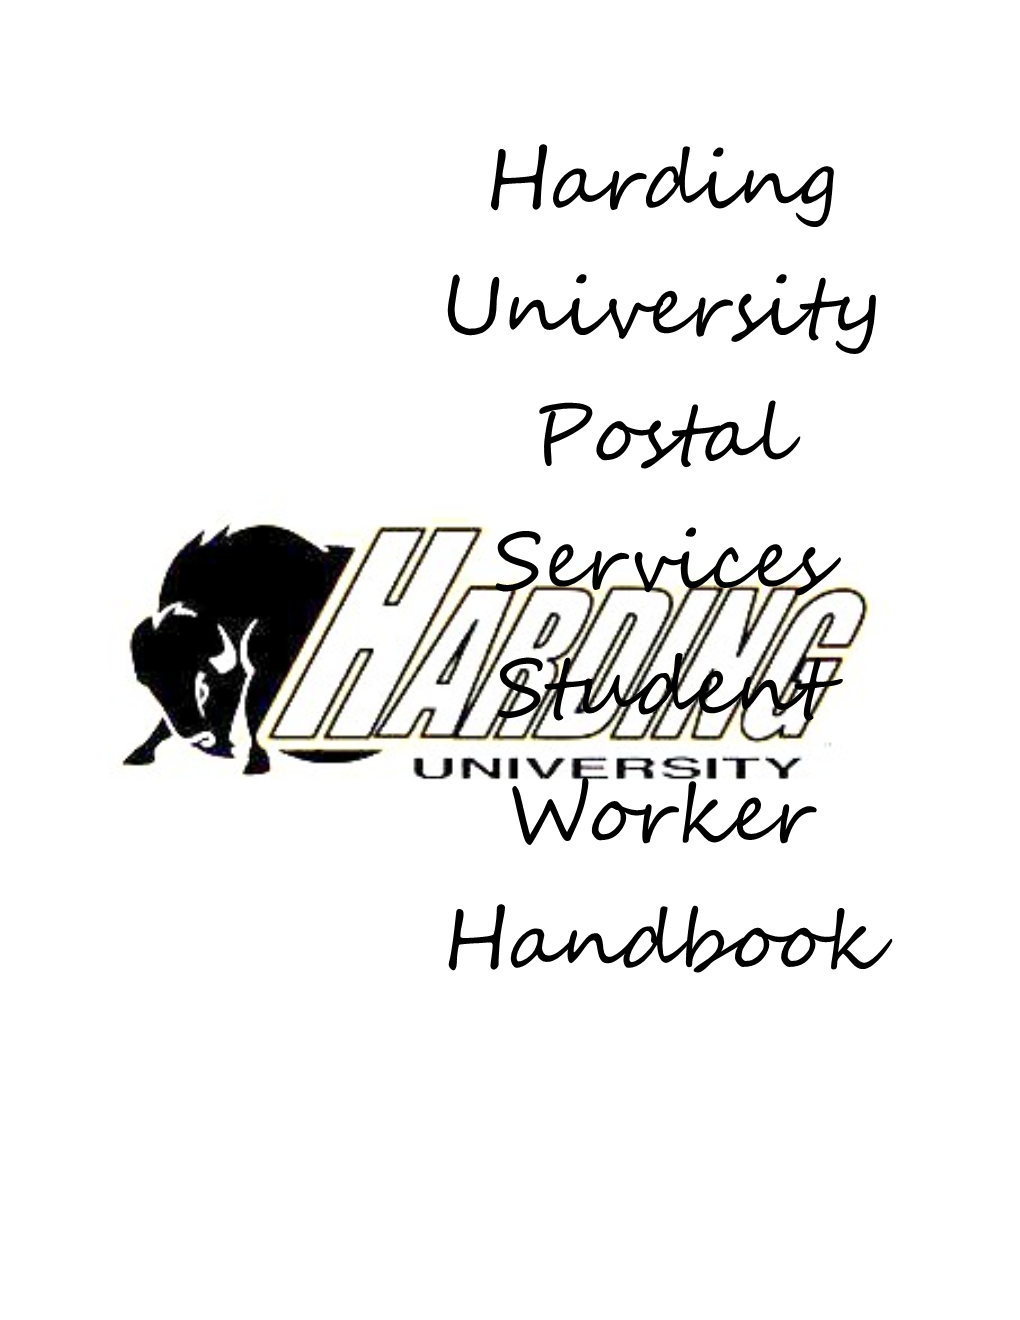 Harding University Postal Services Student Worker Handbook